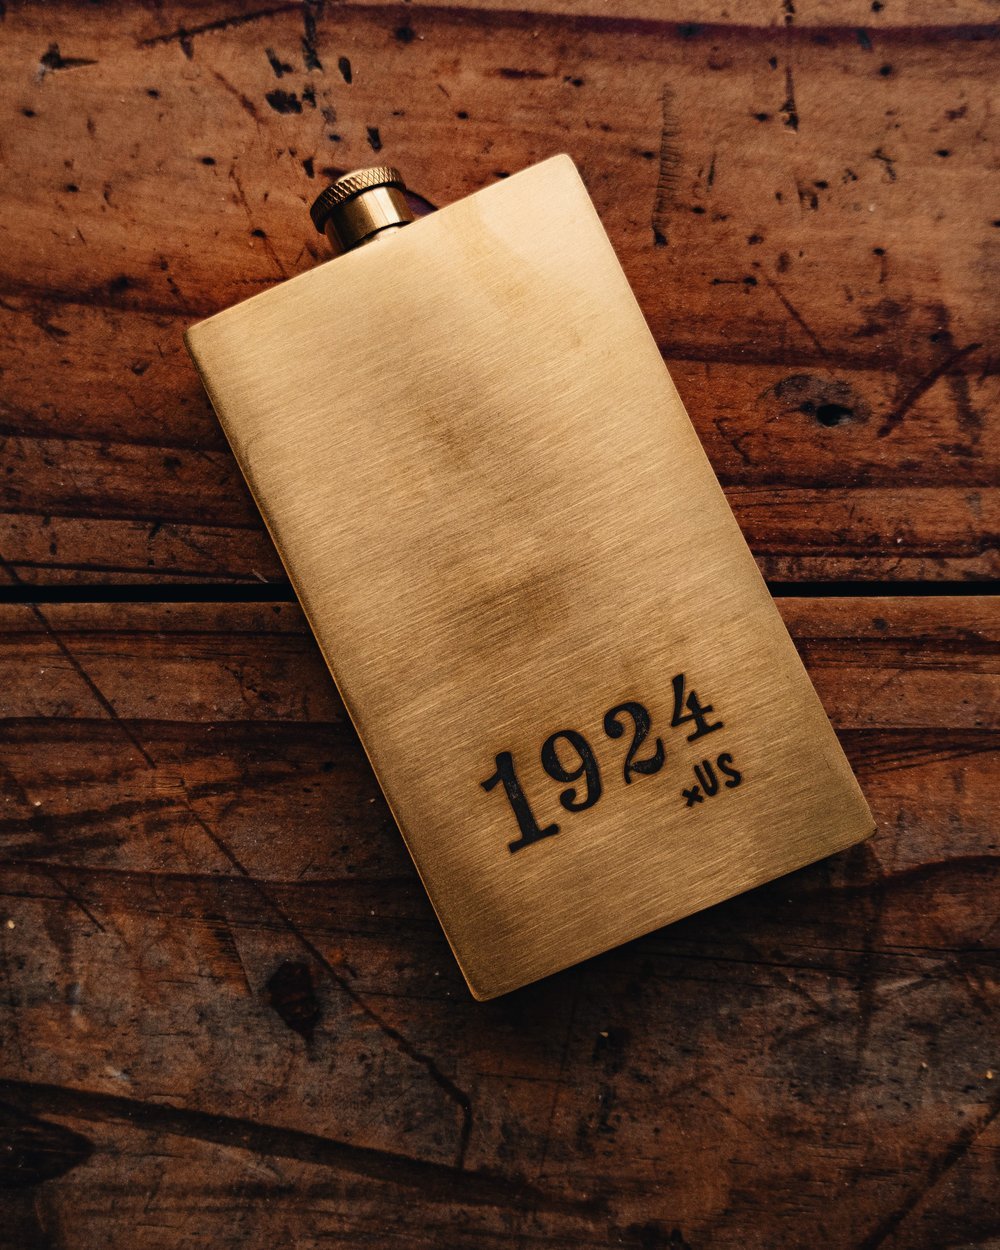 1924us Brass 4 oz Pocket Flask